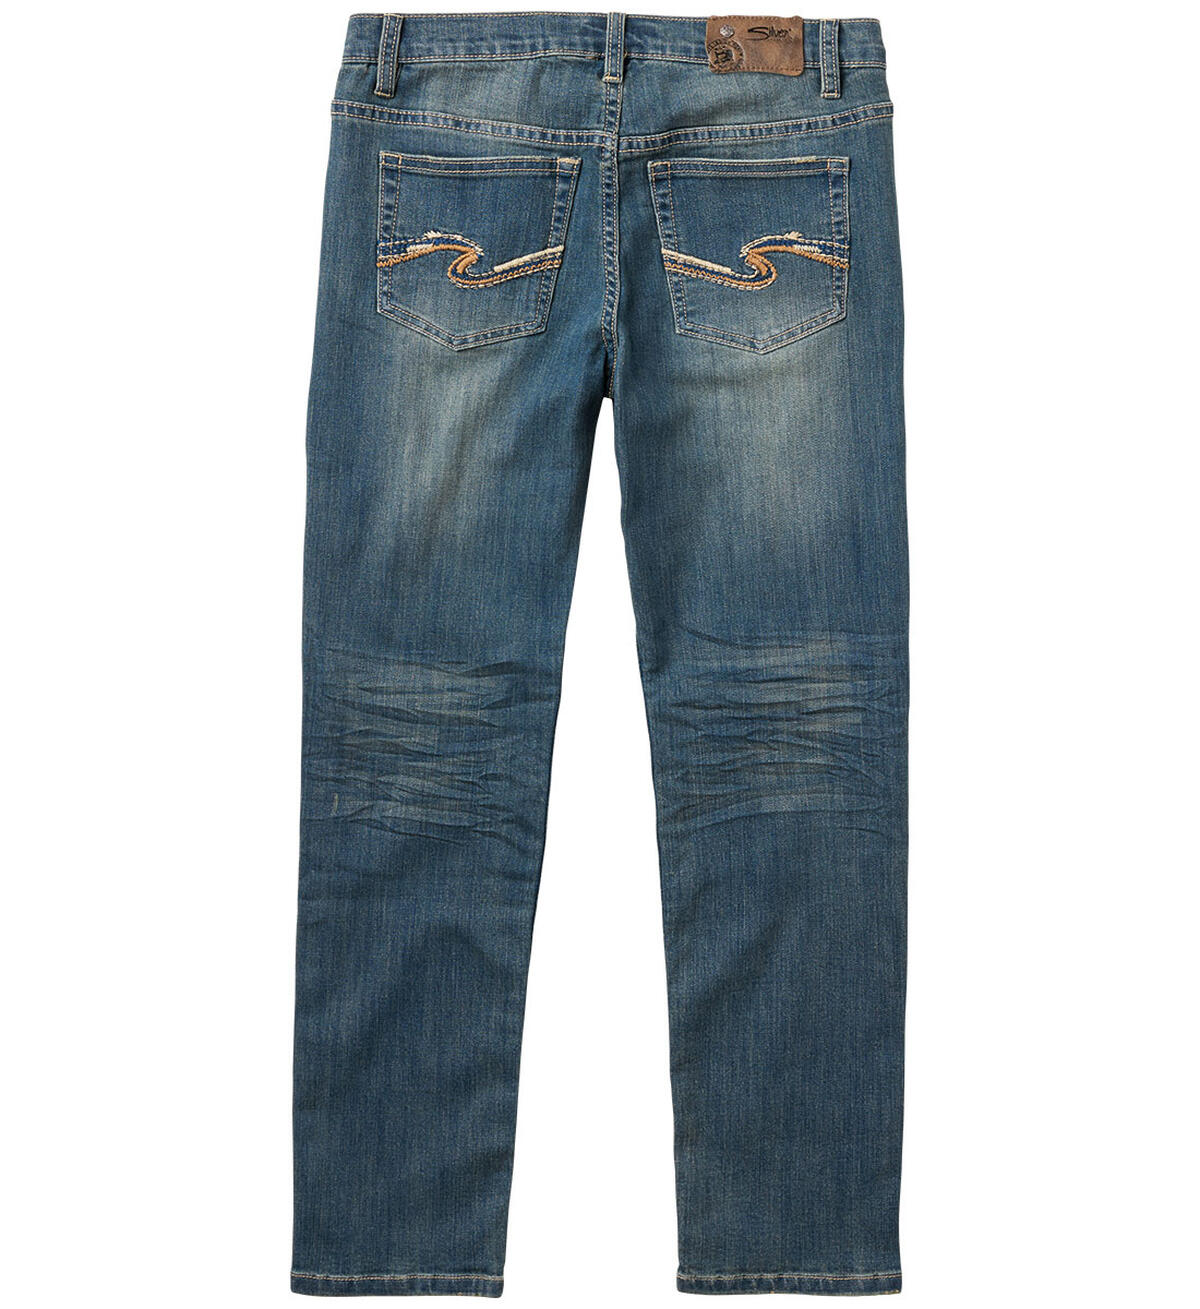 Nathan Skinny Jeans in Medium Wash (4-7), , hi-res image number 1